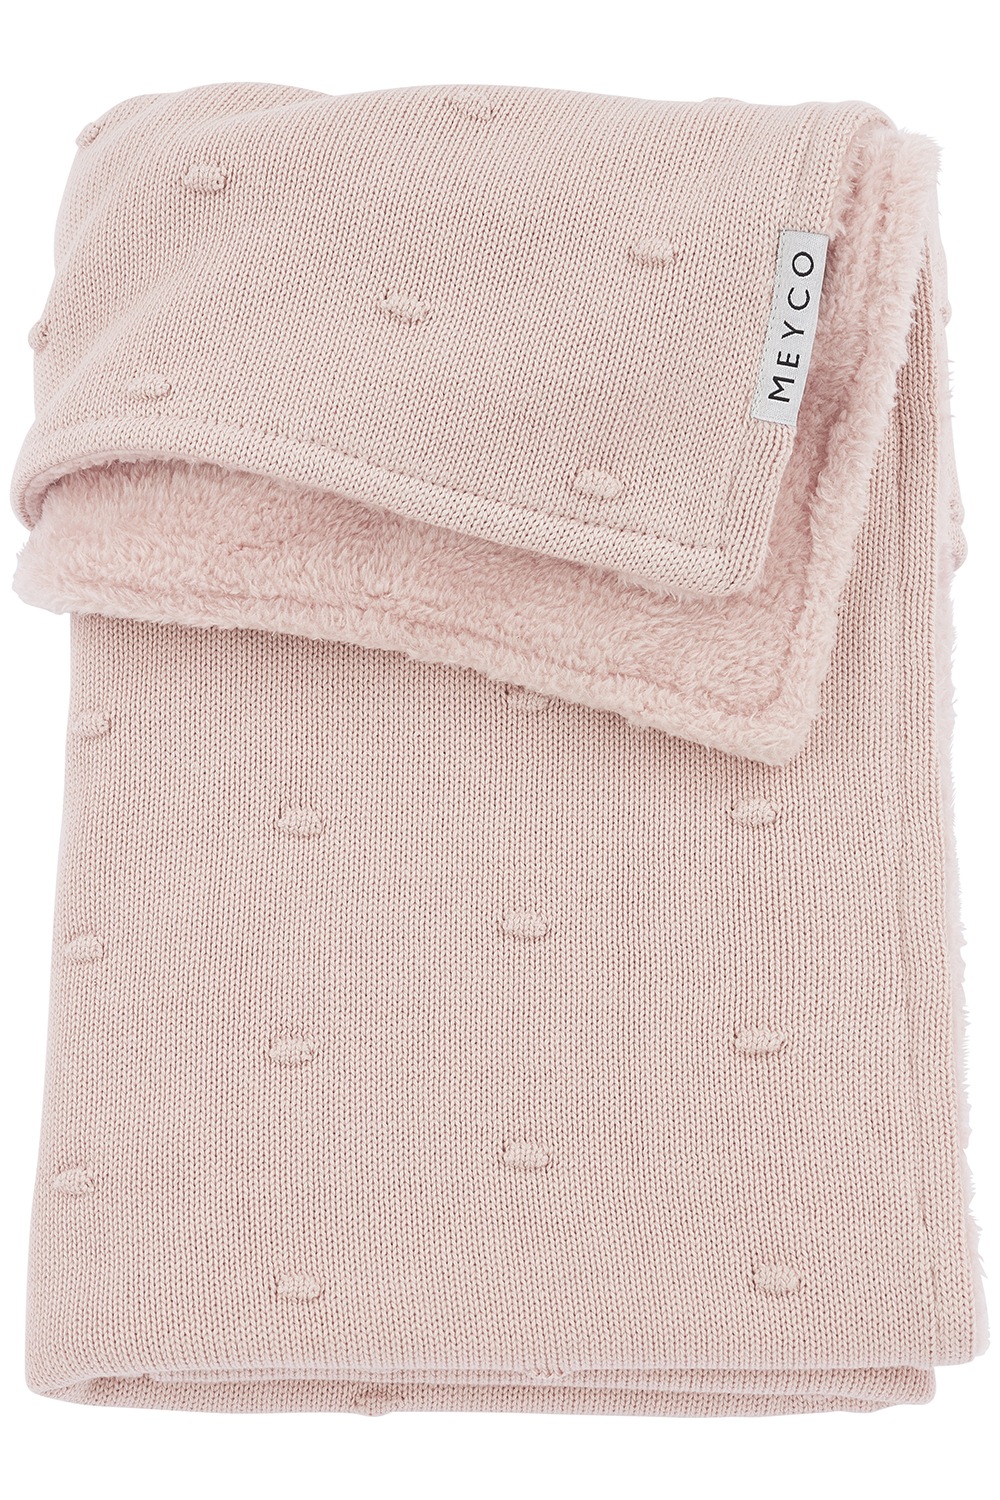 Babydecke Mini Knots teddy - soft pink - 75x100cm